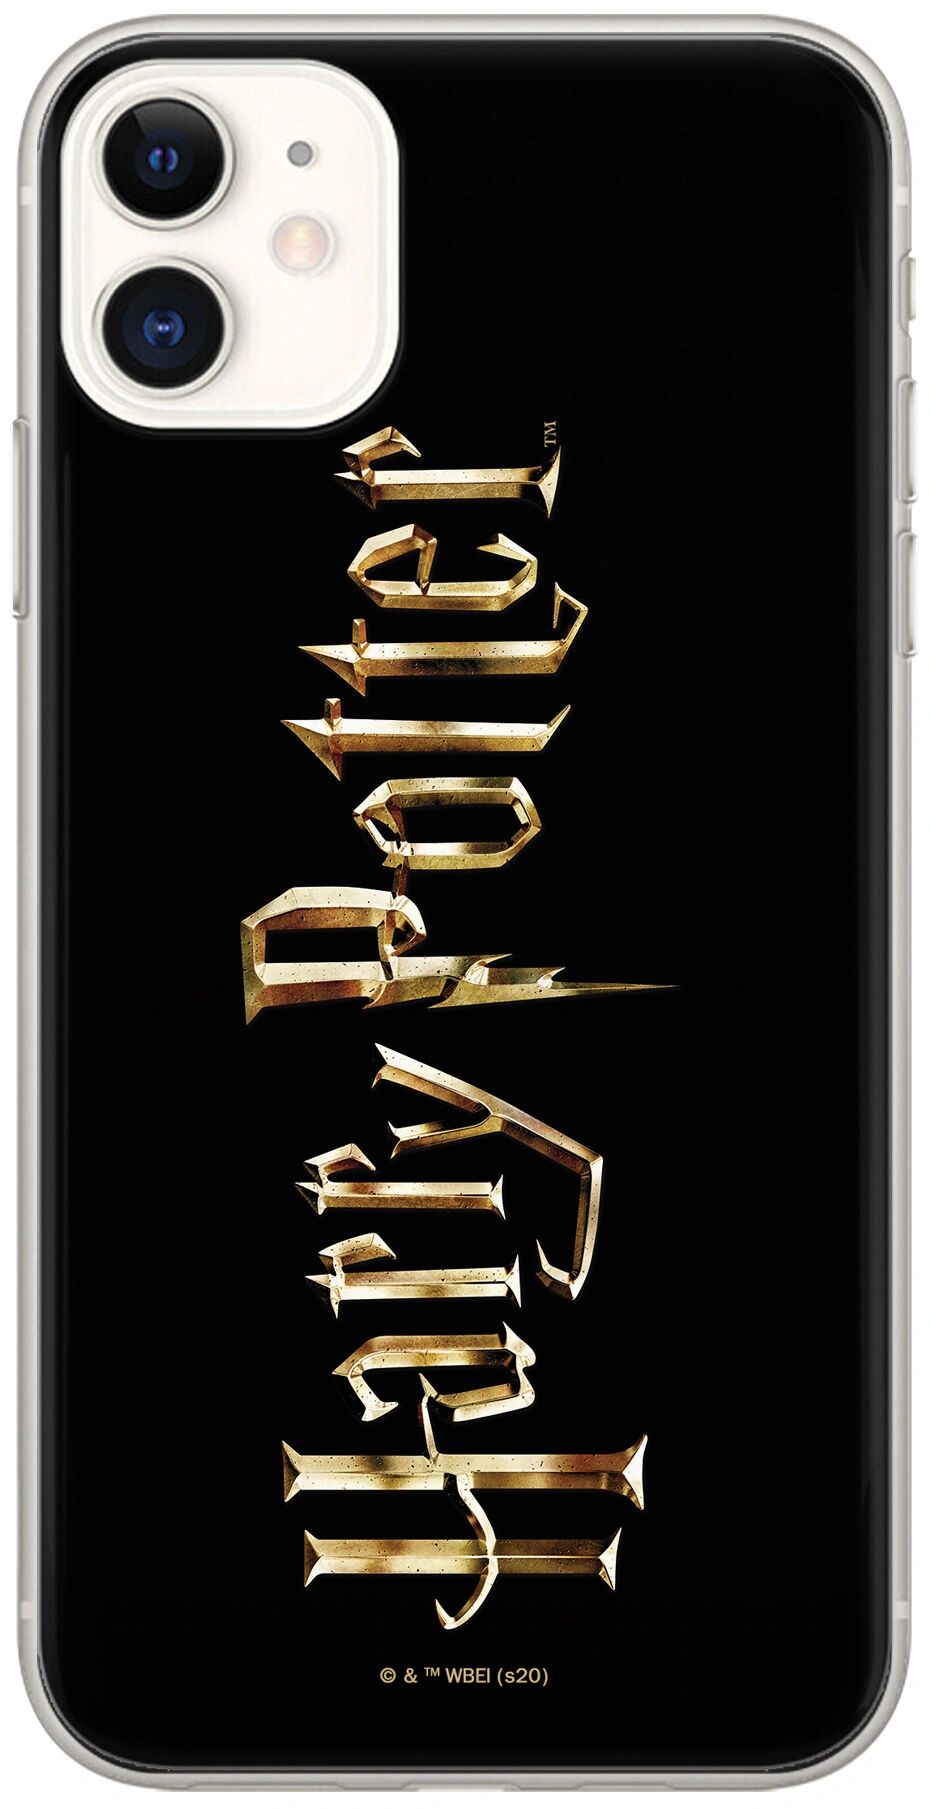 Ert Ochranný kryt pro iPhone 7 PLUS / 8 PLUS - Harry Potter 039